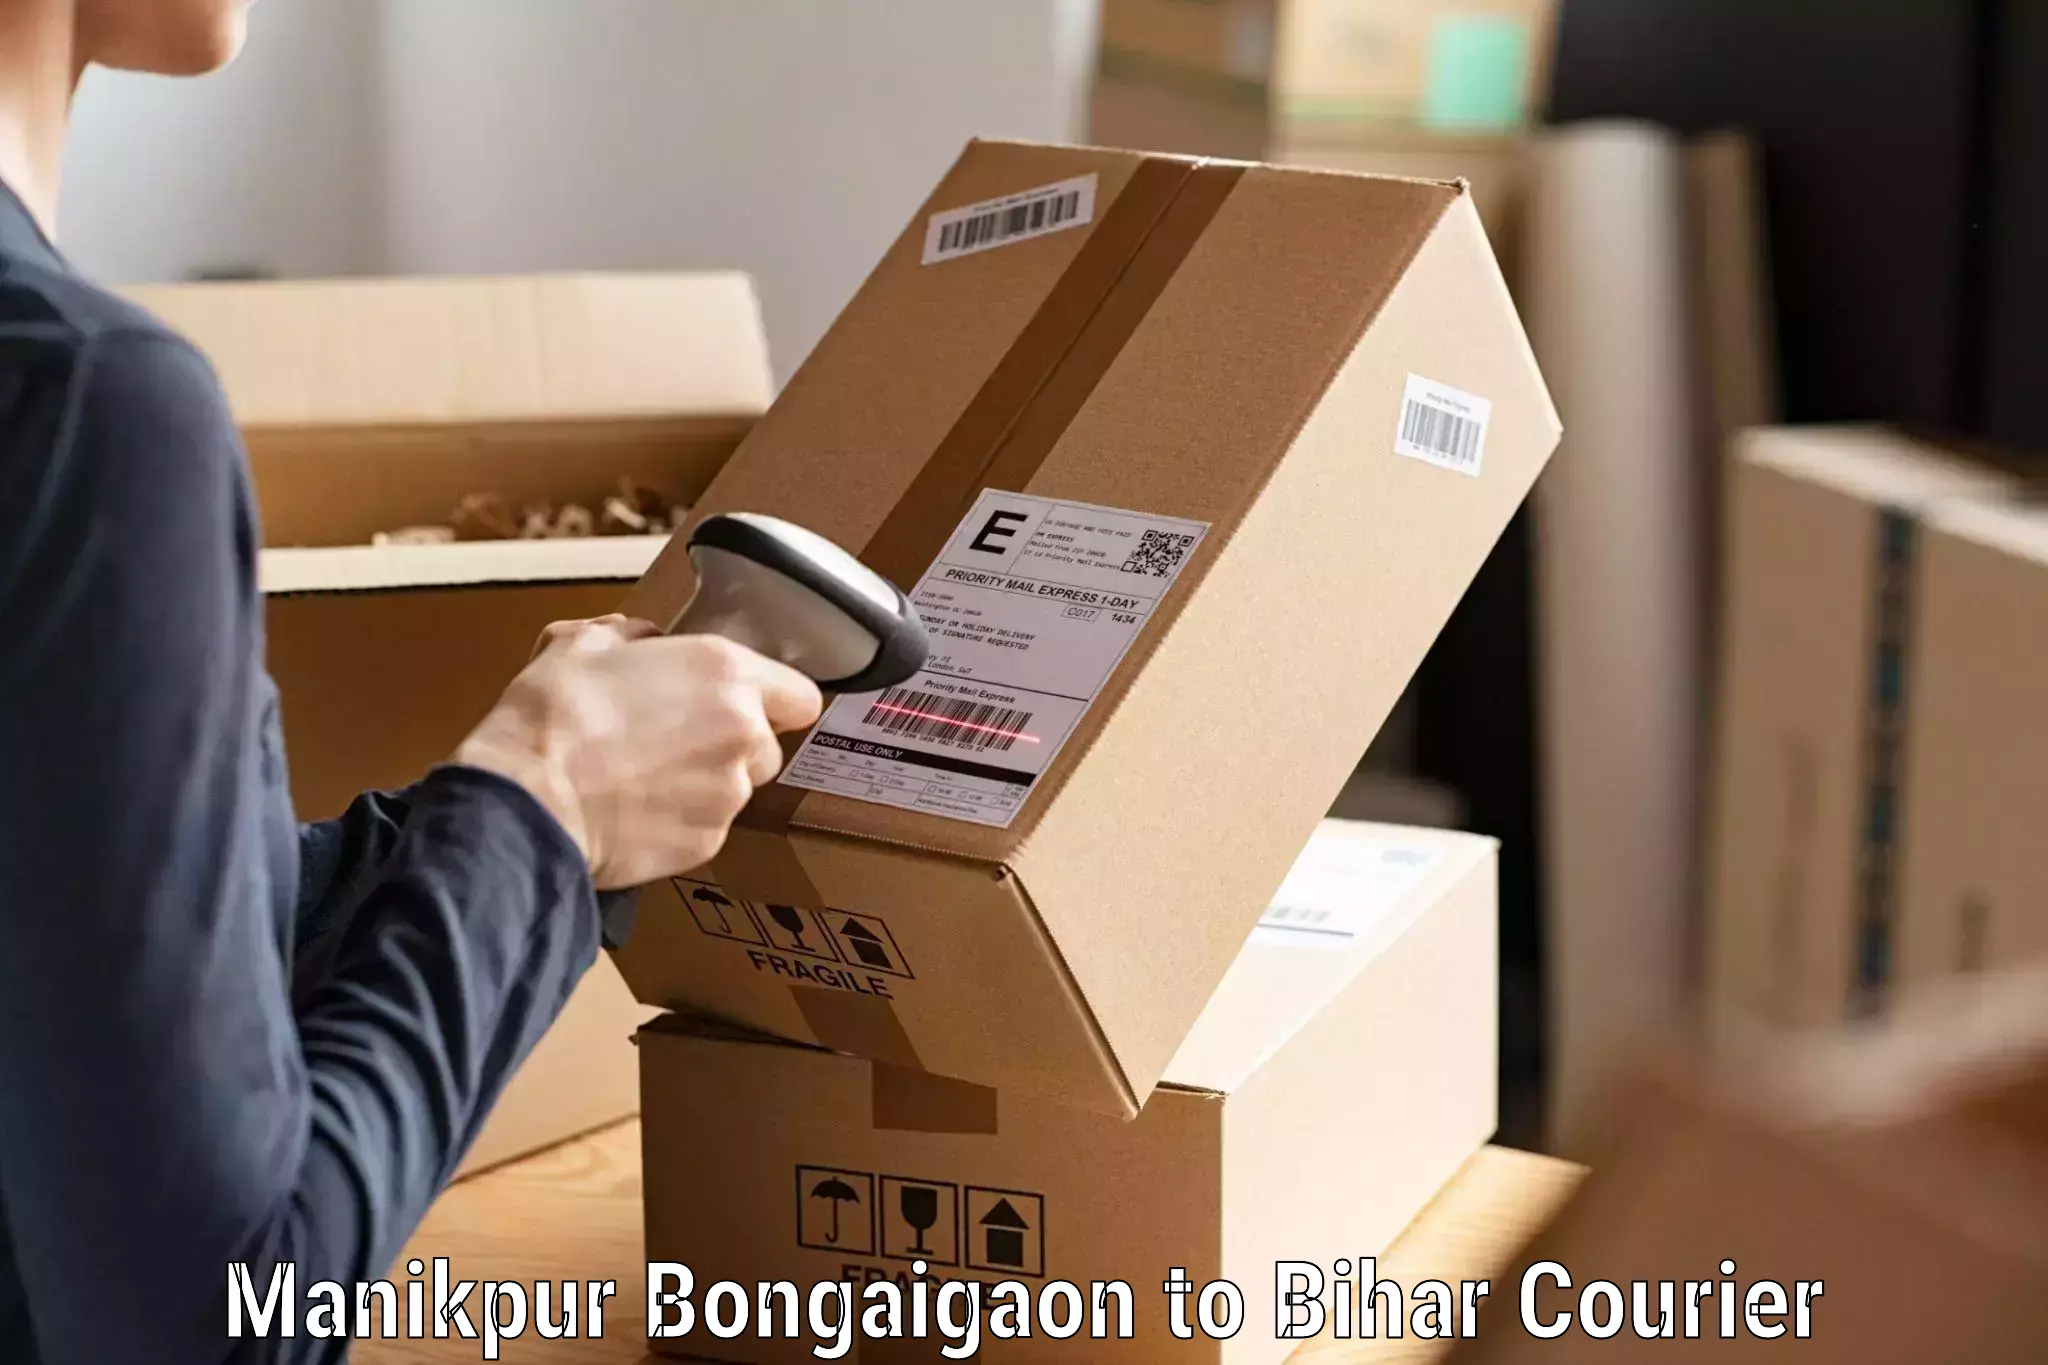 Digital courier platforms Manikpur Bongaigaon to Barhiya